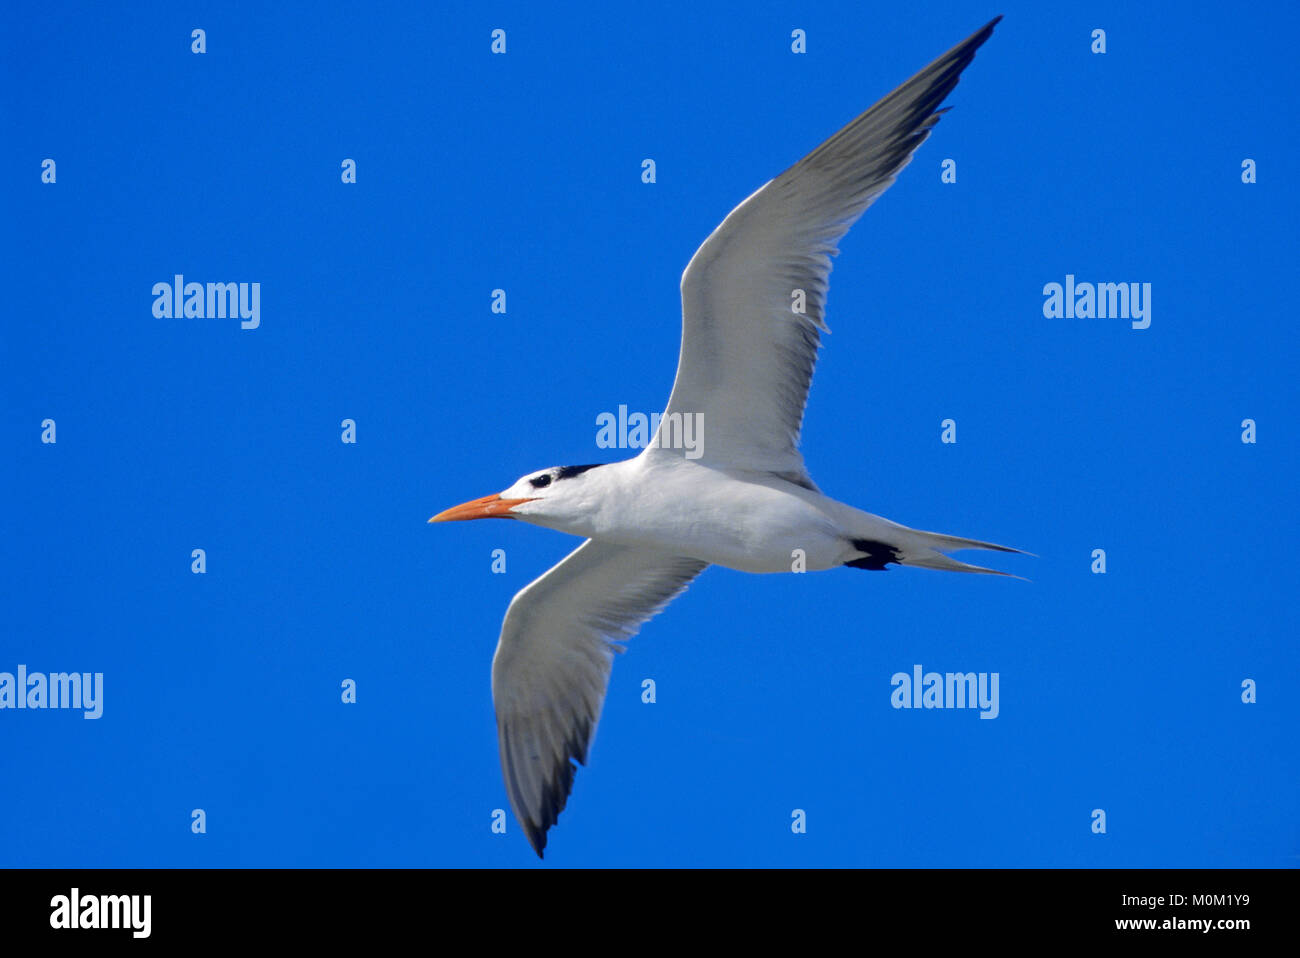 Royal Tern, Sanibel Island, Florida, USA / (Sterna maxima, Thalasseus maximus) | Koenigsseeschwalbe, Sanibel Island, Florida, USA Stock Photo